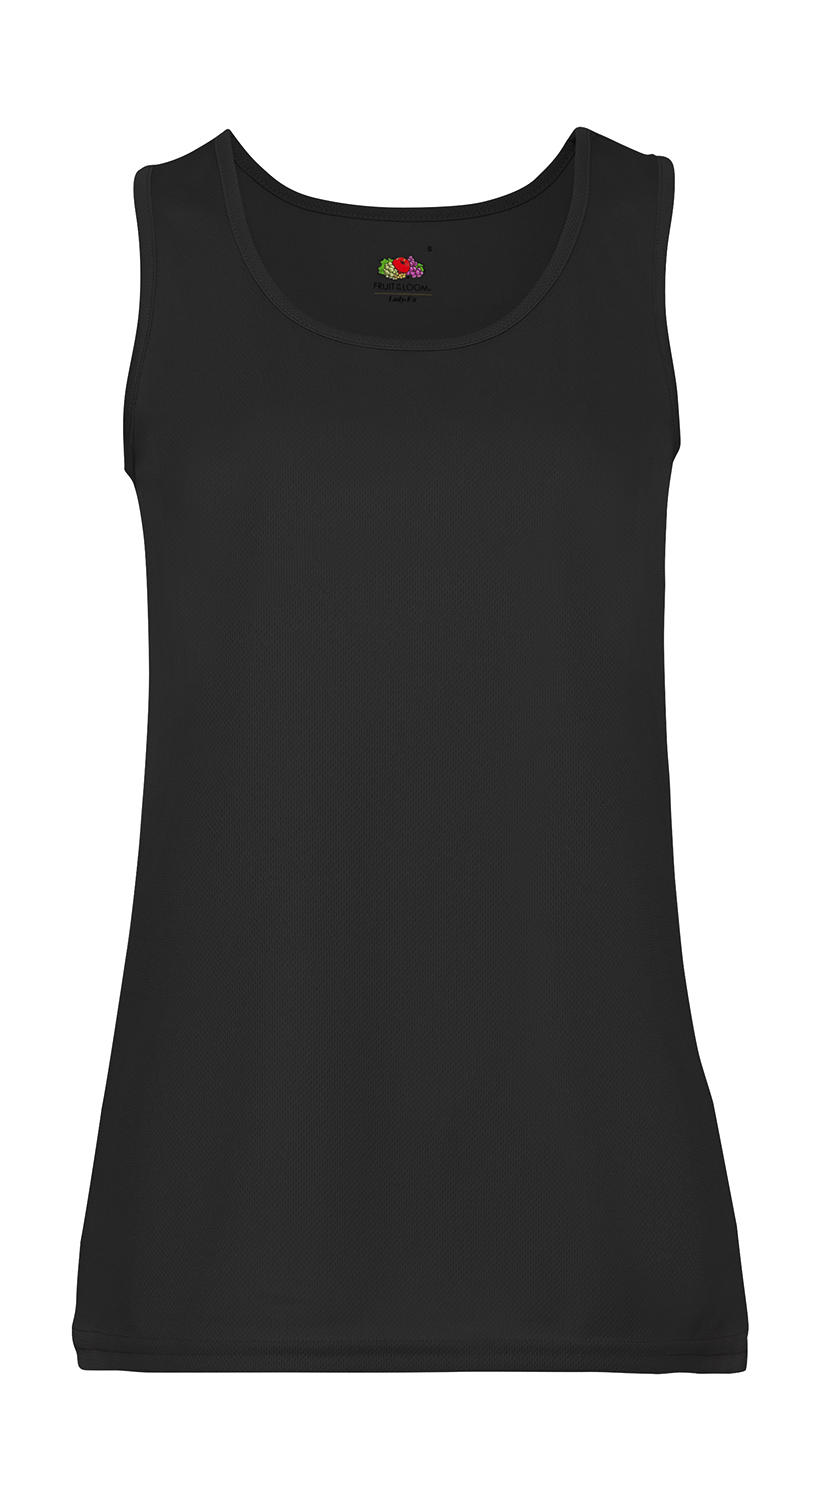  Ladies Performance Vest in Farbe Black